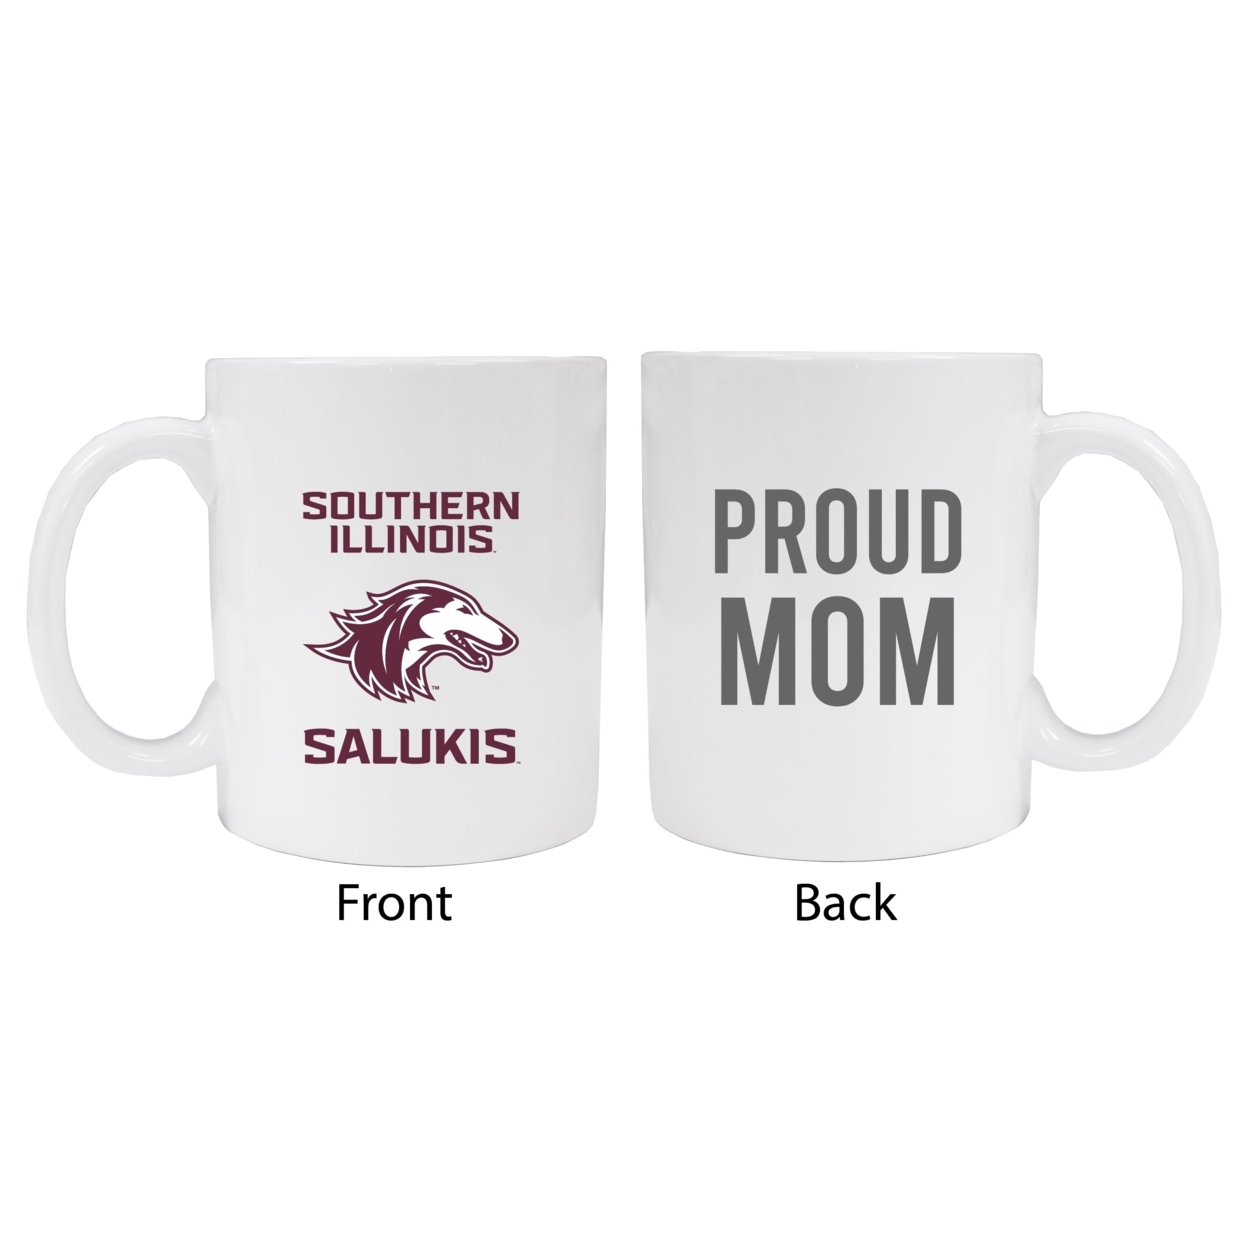 Southern Illinois Salukis Proud Mom Ceramic Coffee Mug - White (2 Pack)